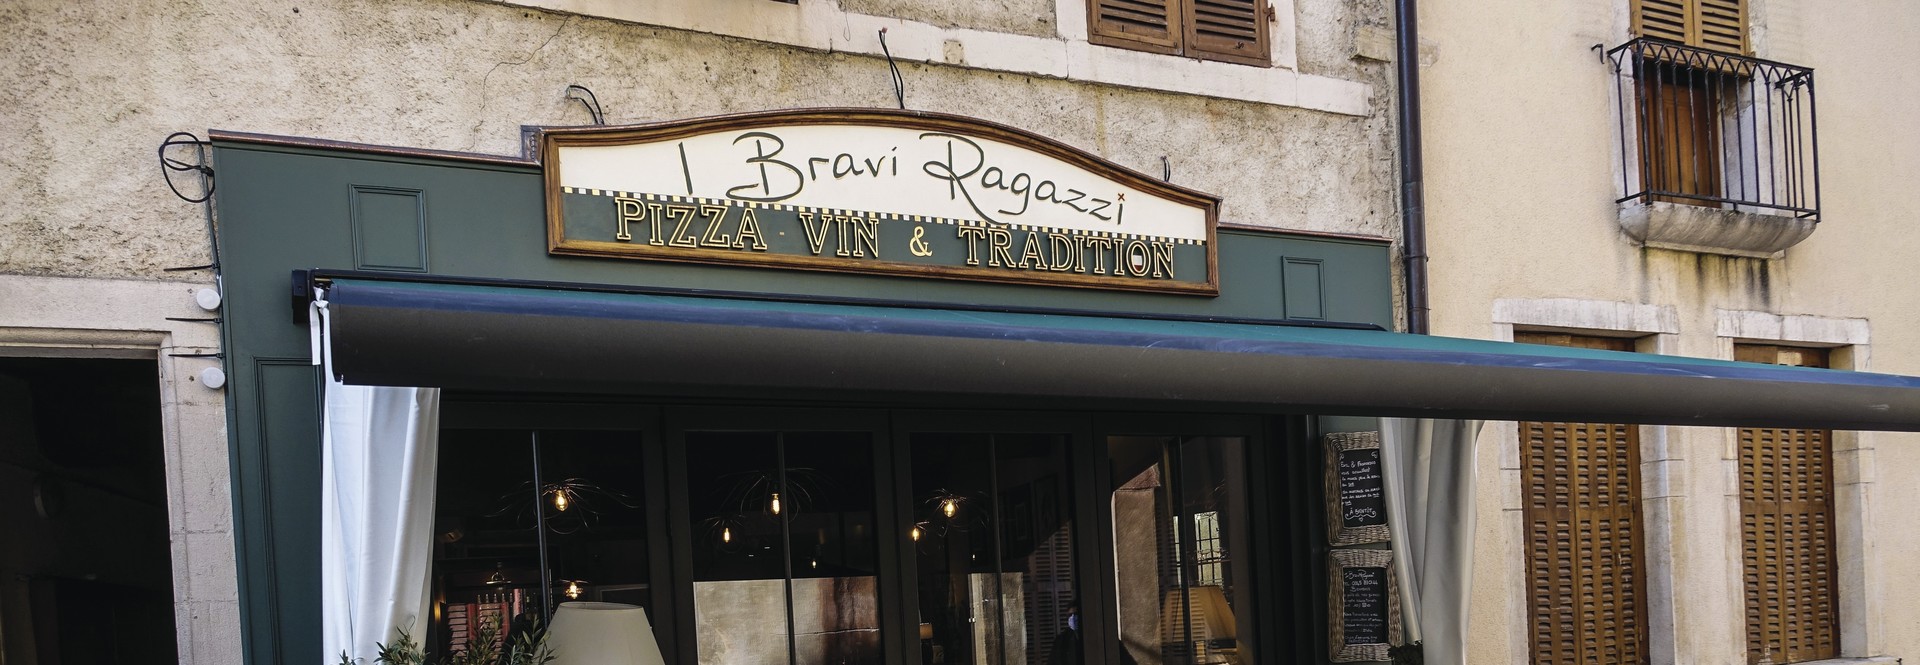 Boutique Pizzeria I BRAVI RAGAZZI - Côte-d'Or